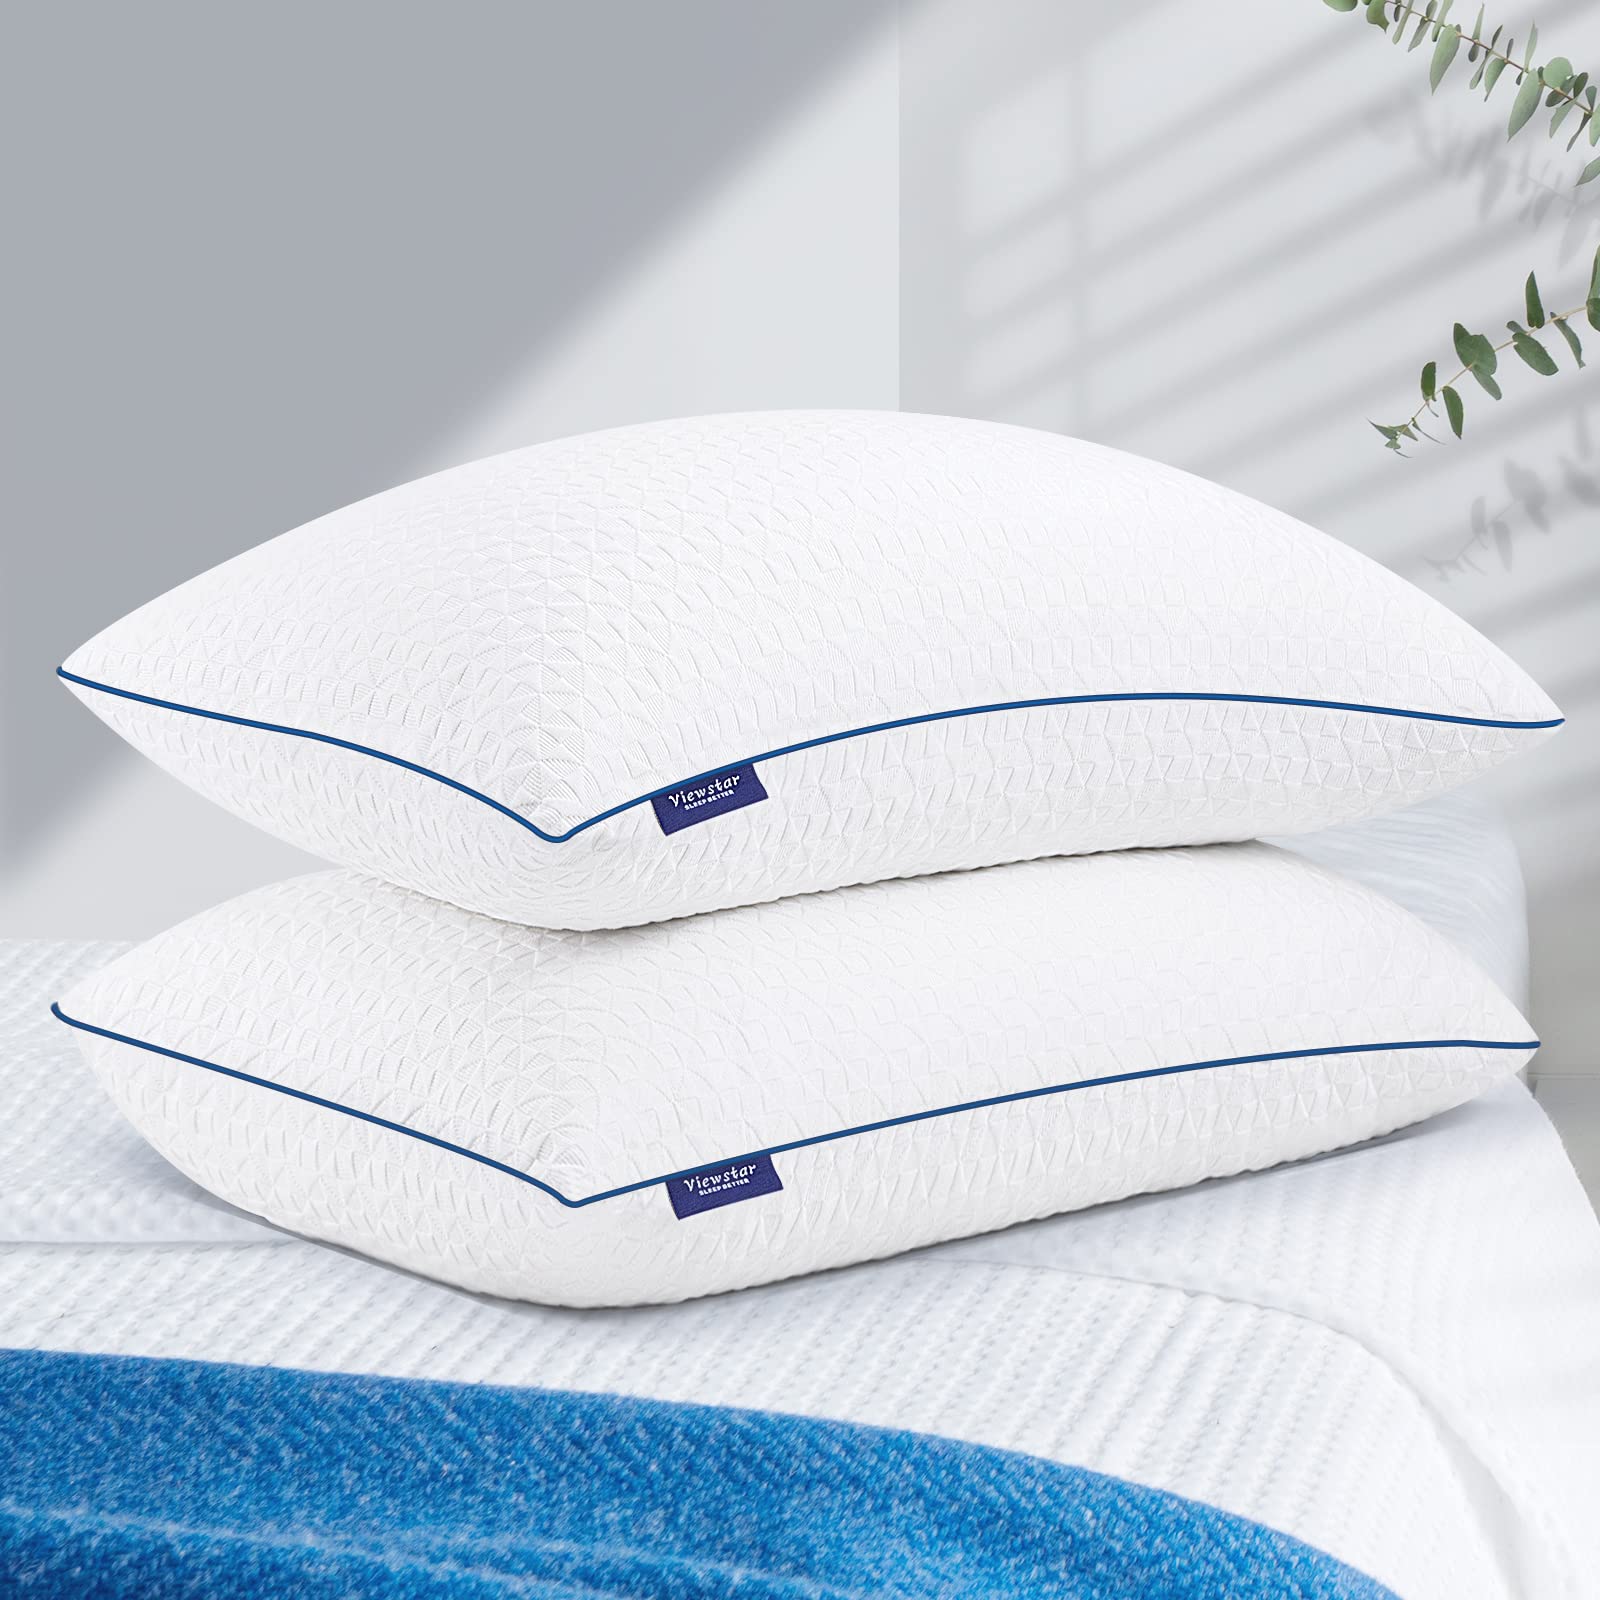  Shredded Memory Foam Pillows for Sleeping - Queen Size